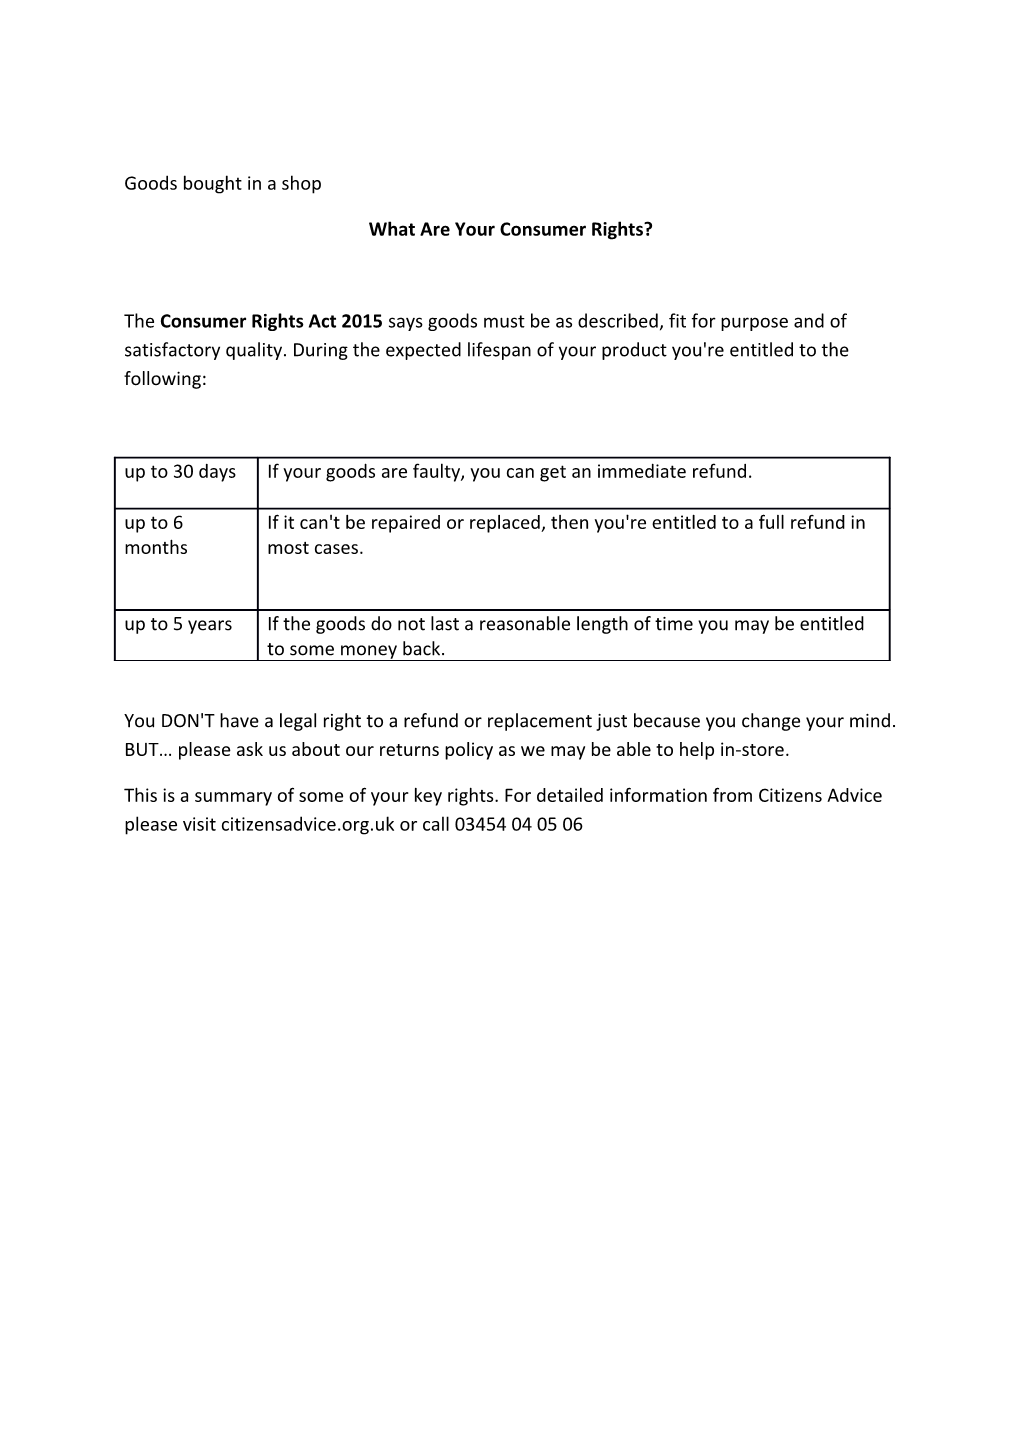 Consumer Rights Summary: Goods